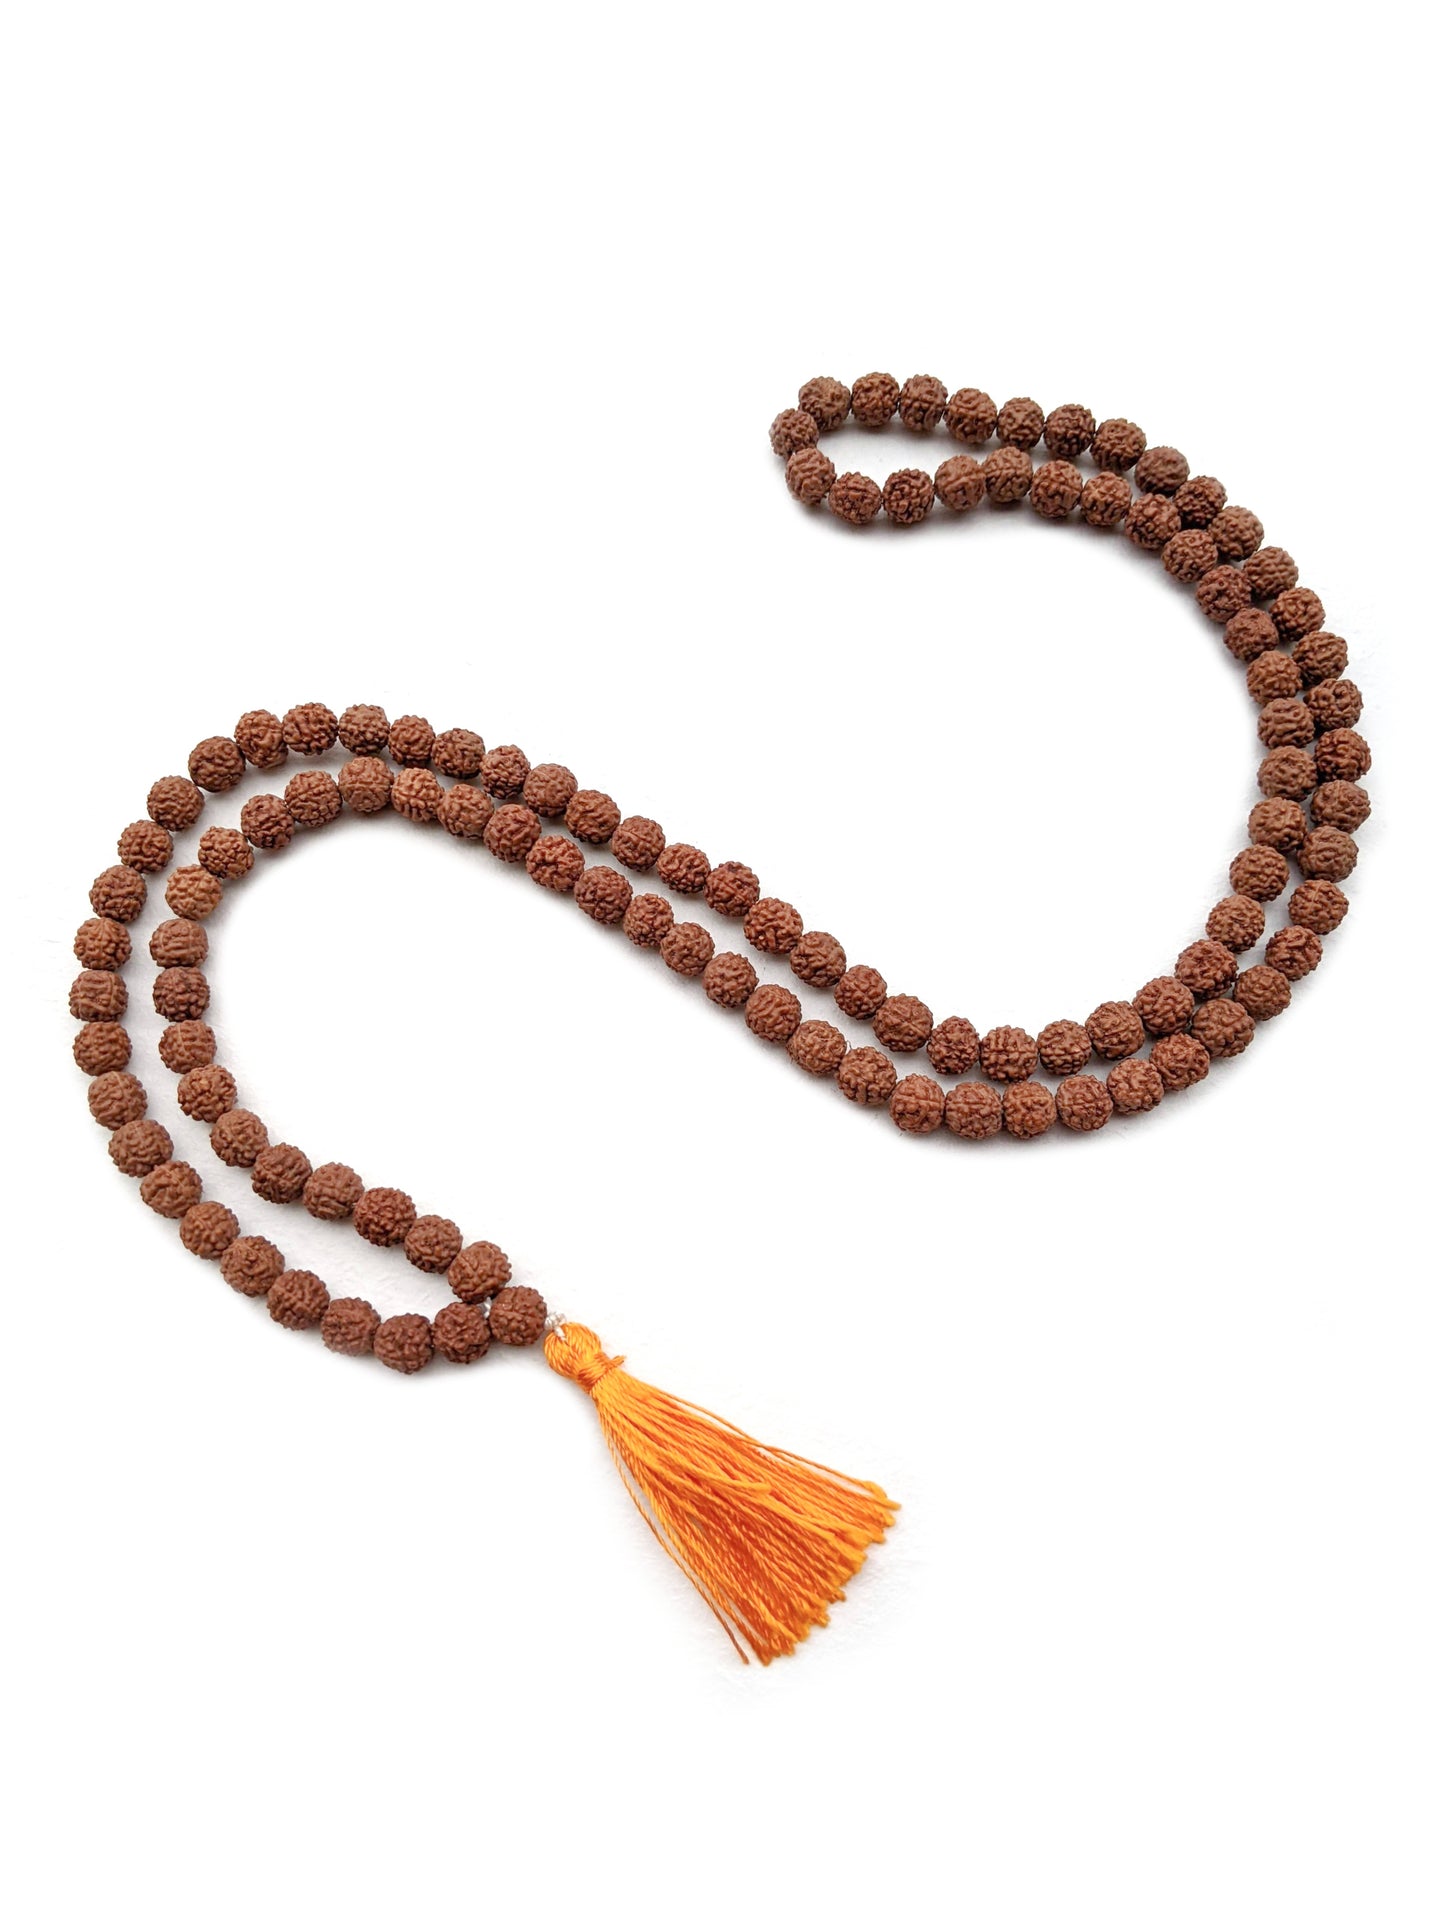 Rudraksha Mala Prayer Beads - Yellow Tassel